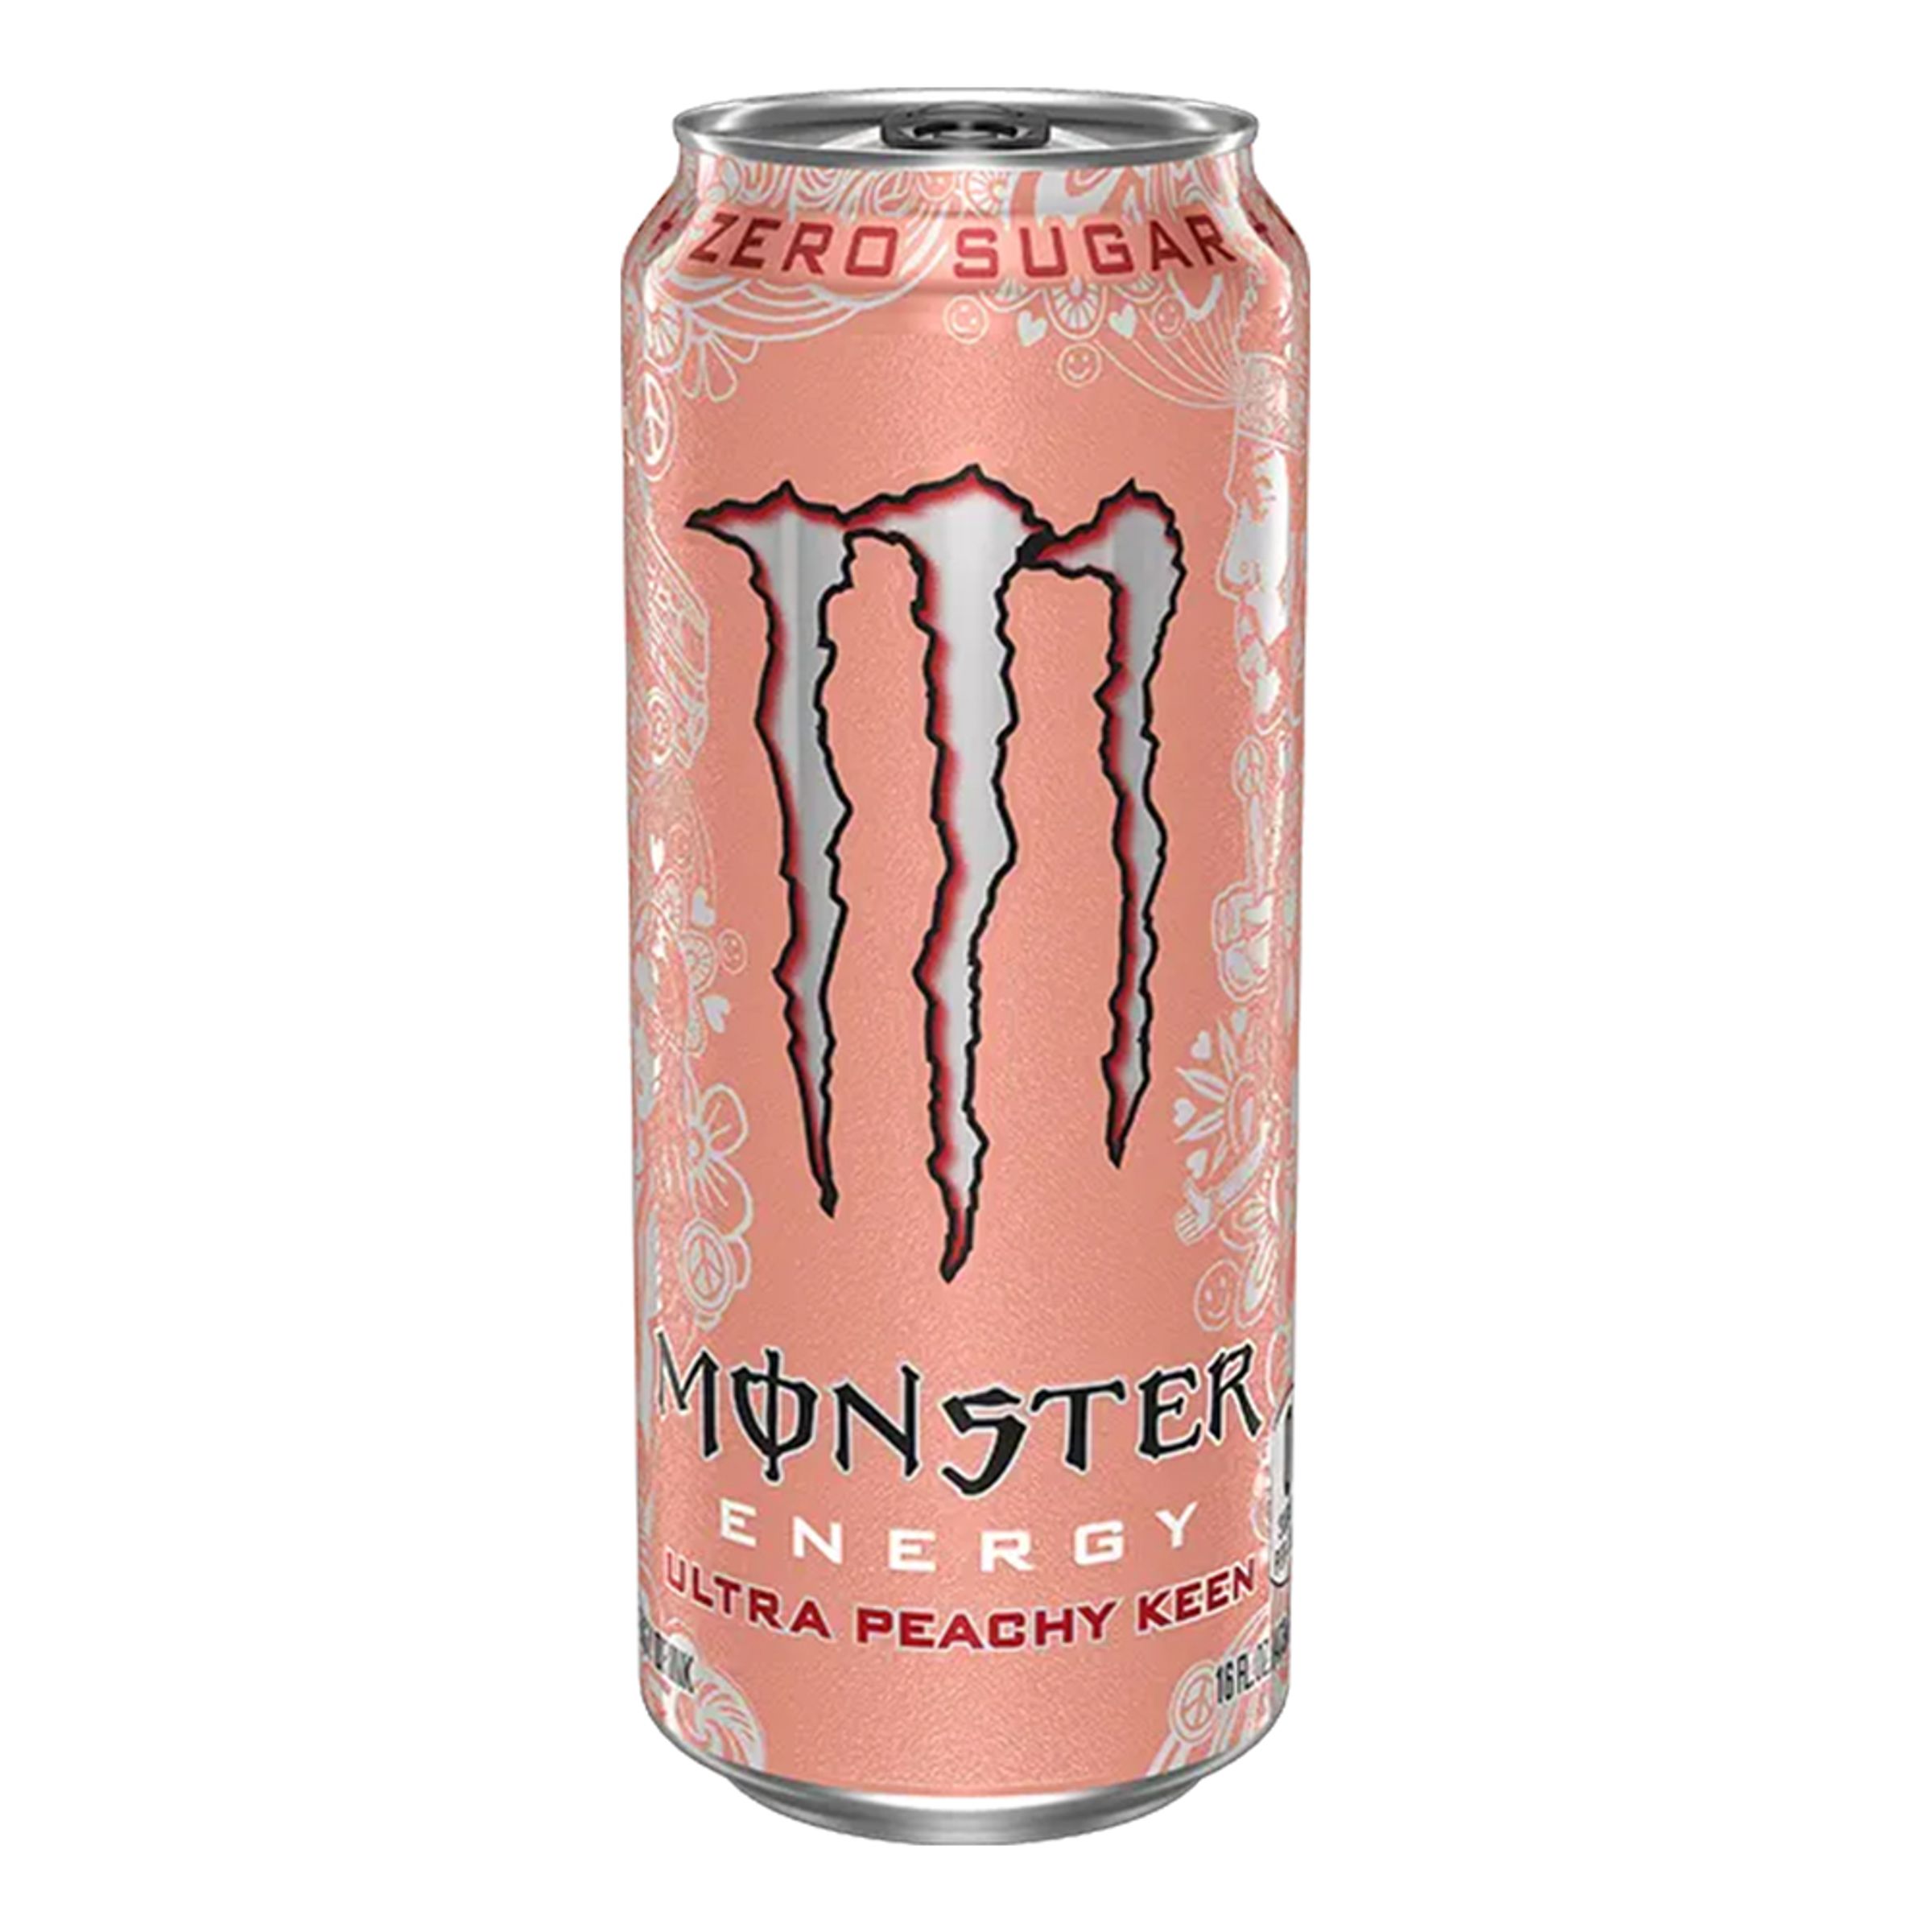 Monster Energy Ultra Peachy Keen - 500 ml